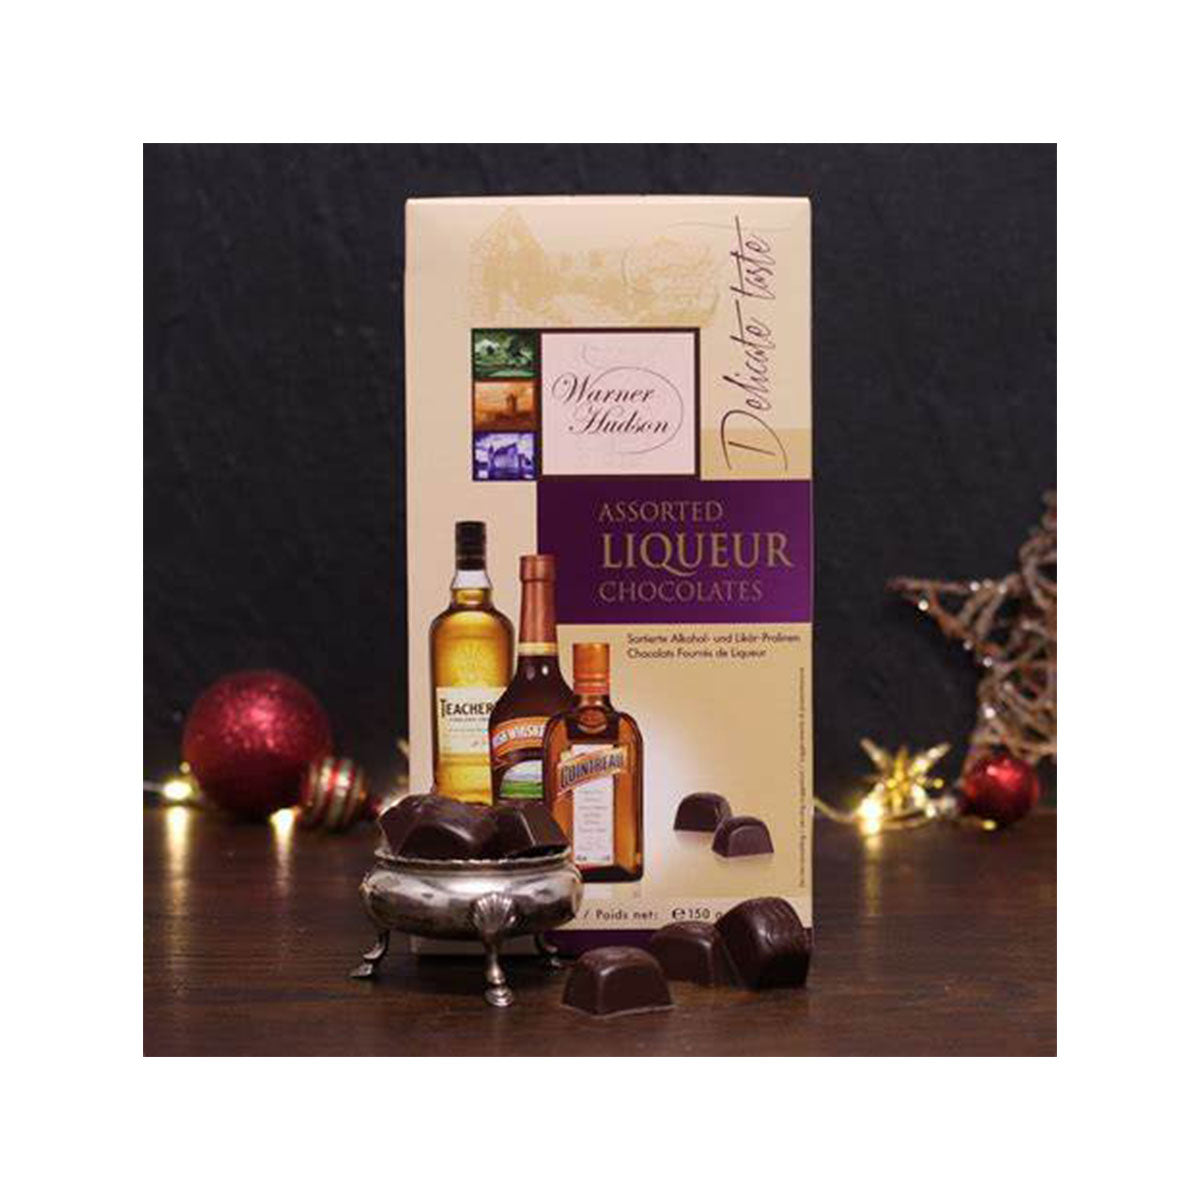 Warner Hudson Assorted Liqueur Chocolates